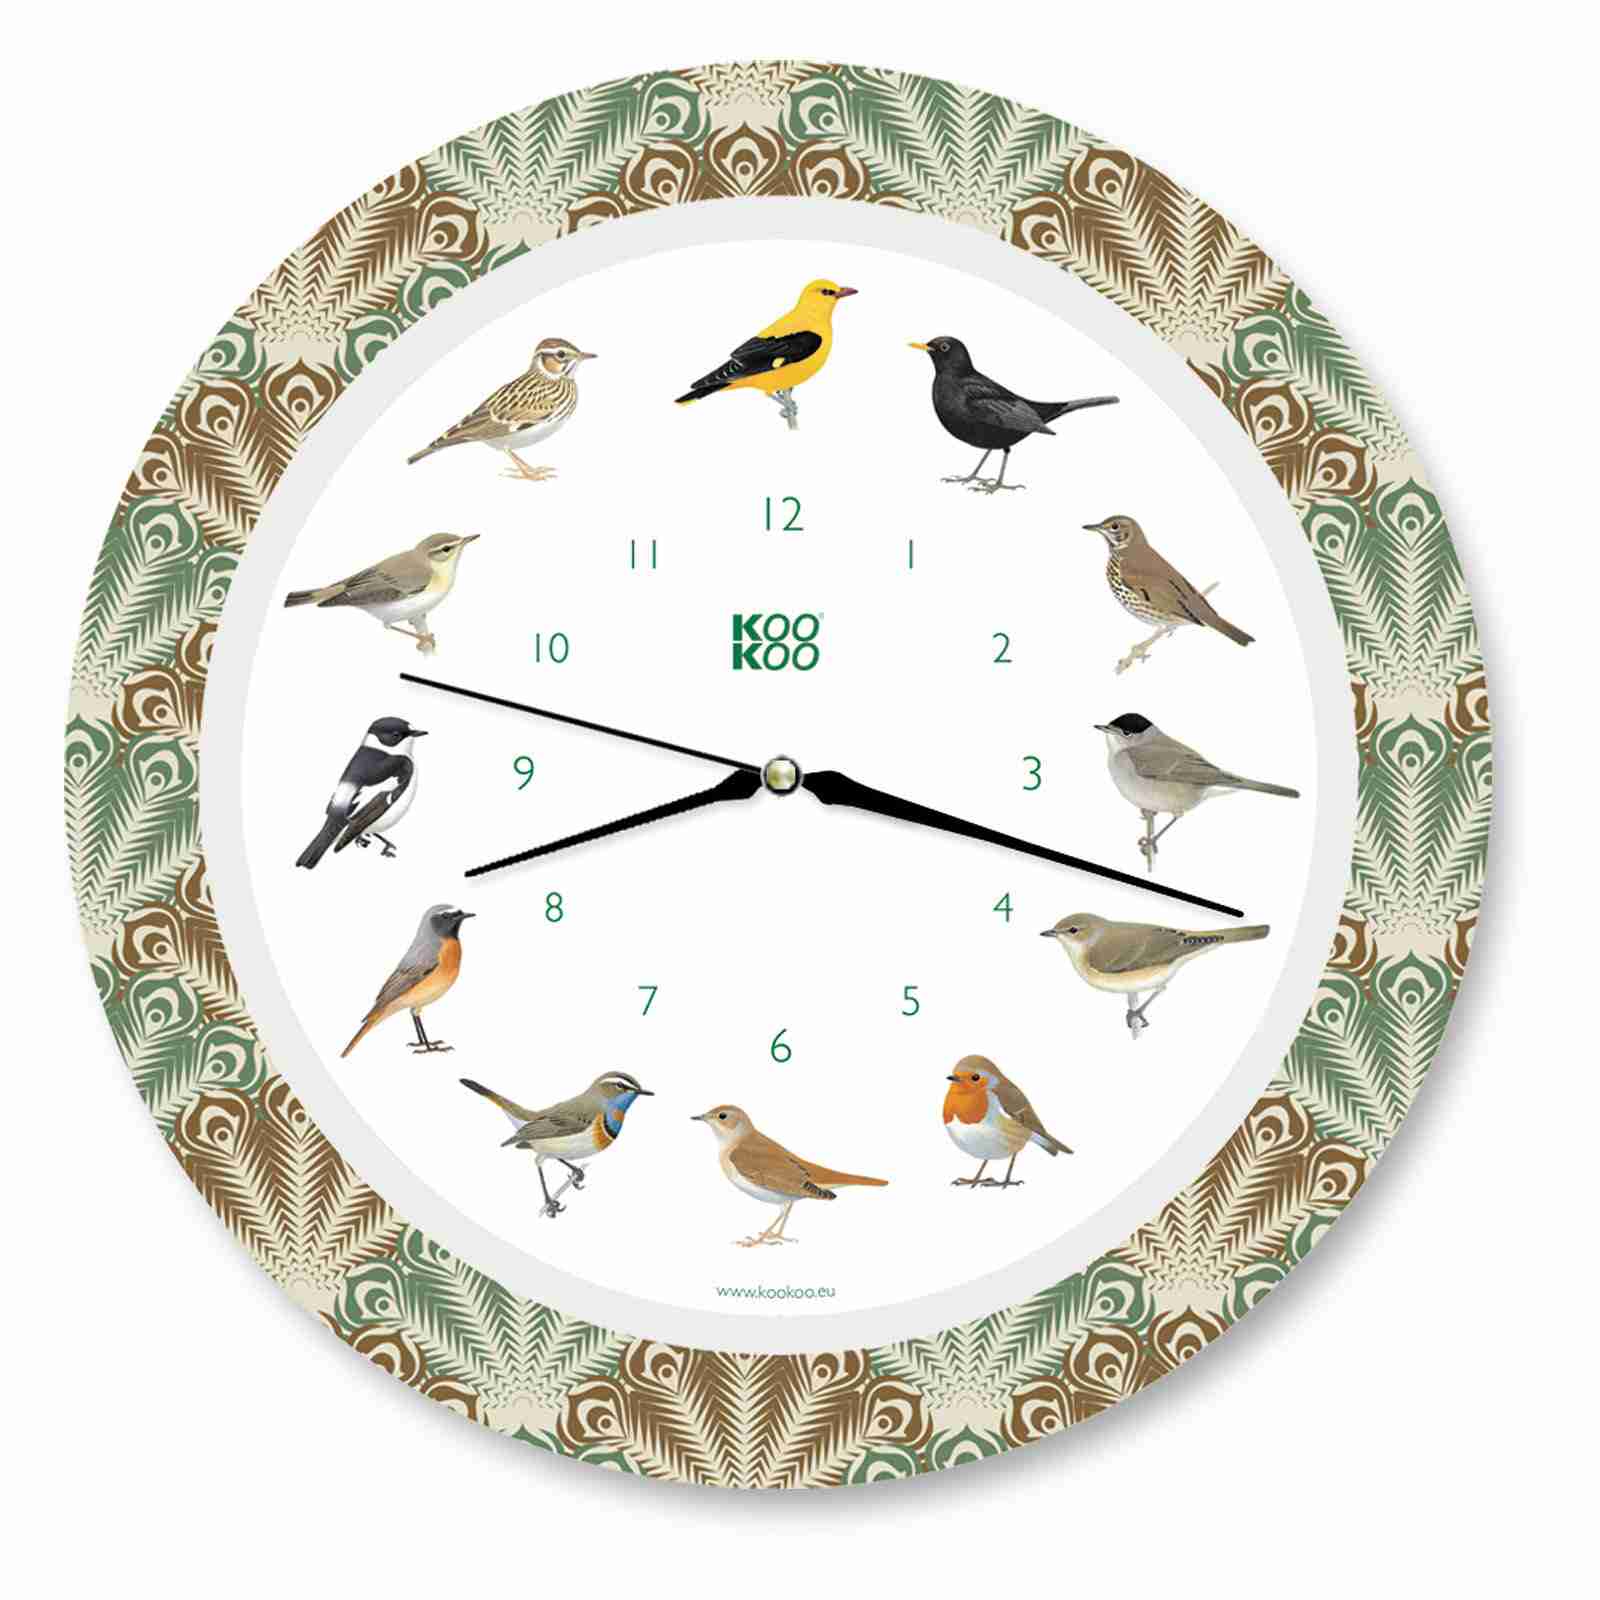 KOOKOO（クークー) Singvögel（ソングバード) 歌う壁掛け時計 